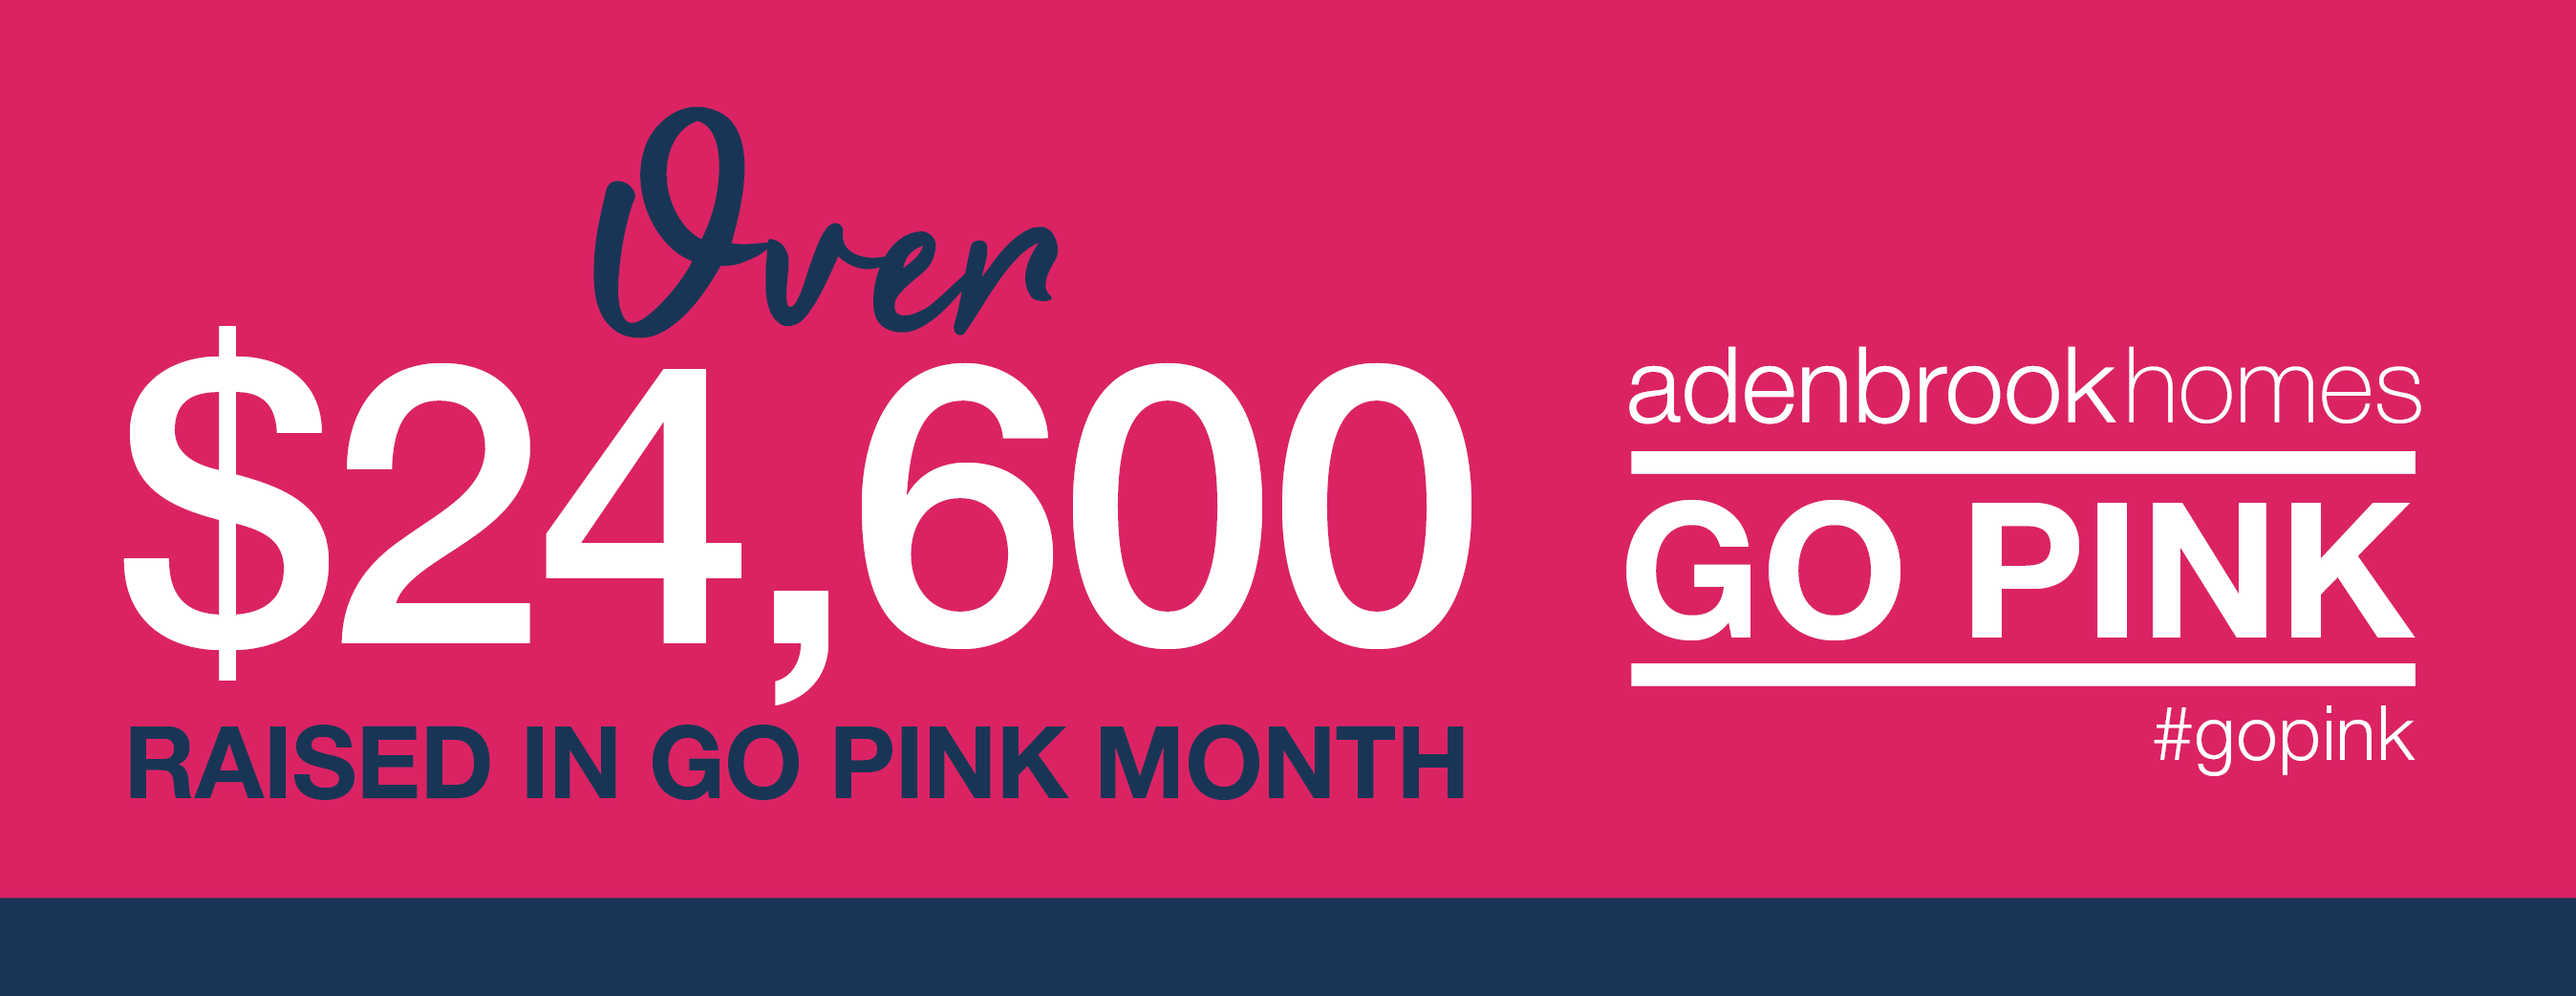 Go Pink - Pardot header 647x250 - over $24000 raised